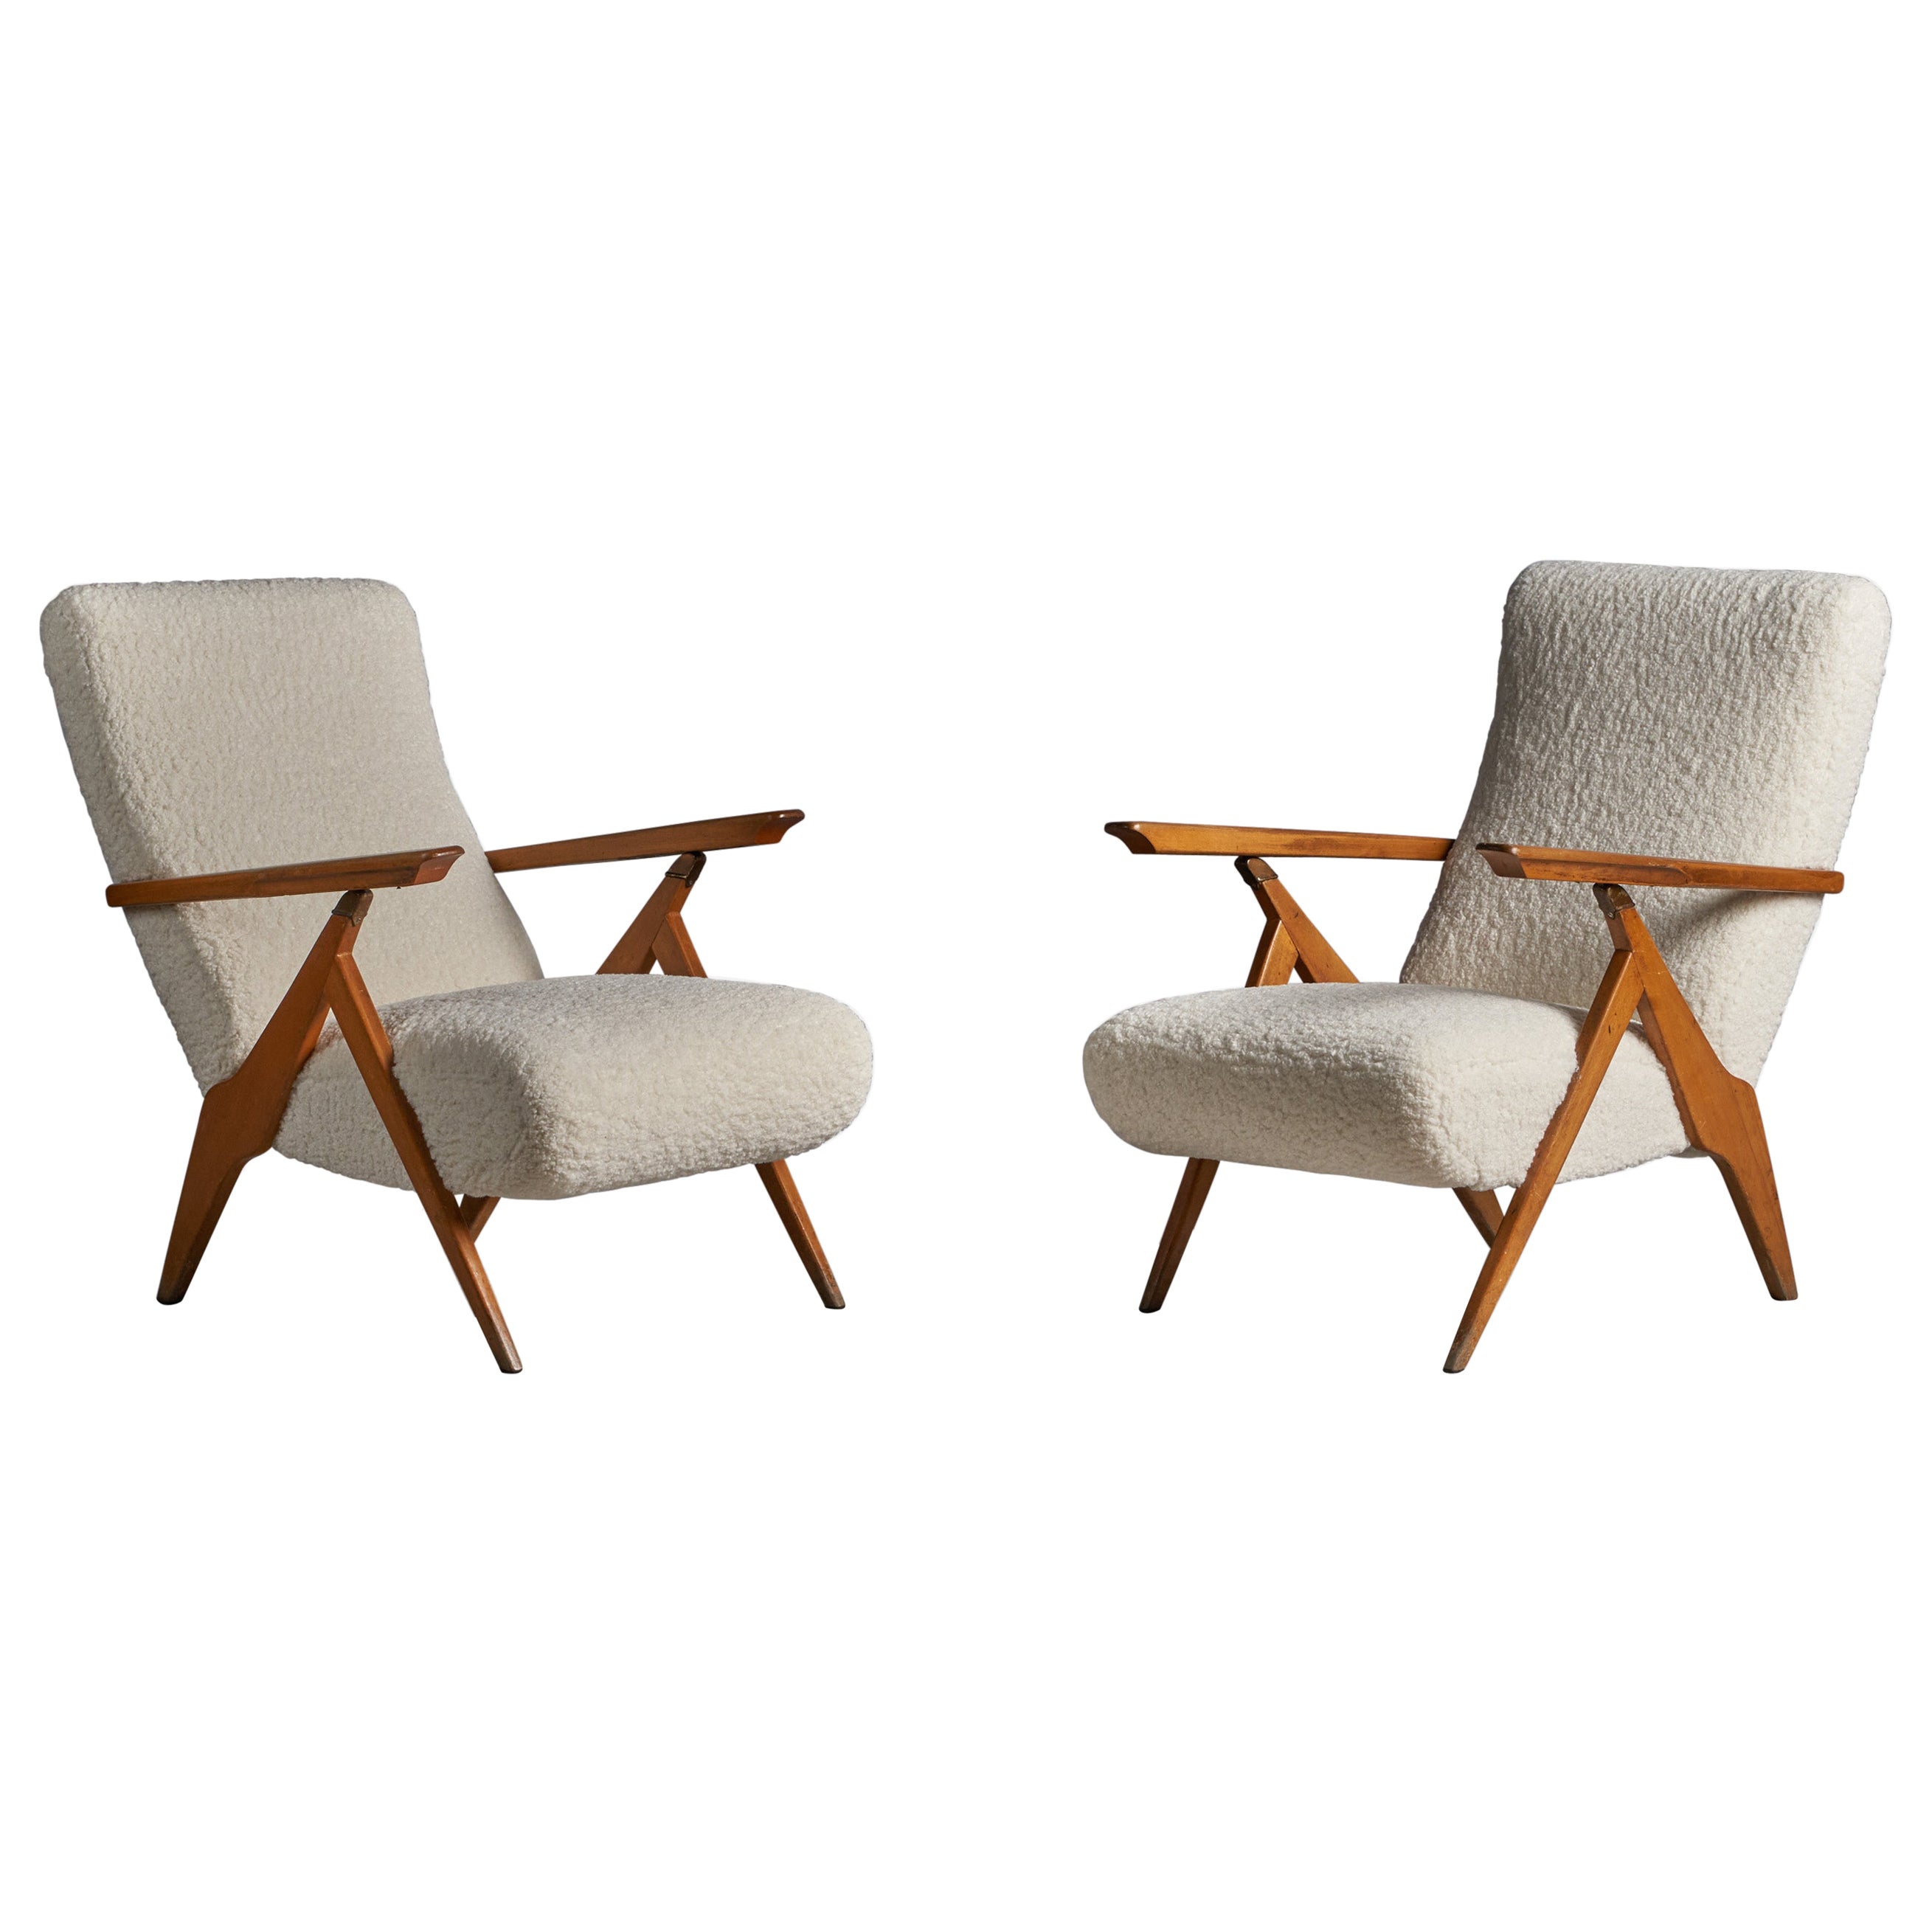 Antonio Gorgone, Adjustable Lounge Chairs, Wood, Brass, Fabric, Italy, 1950s